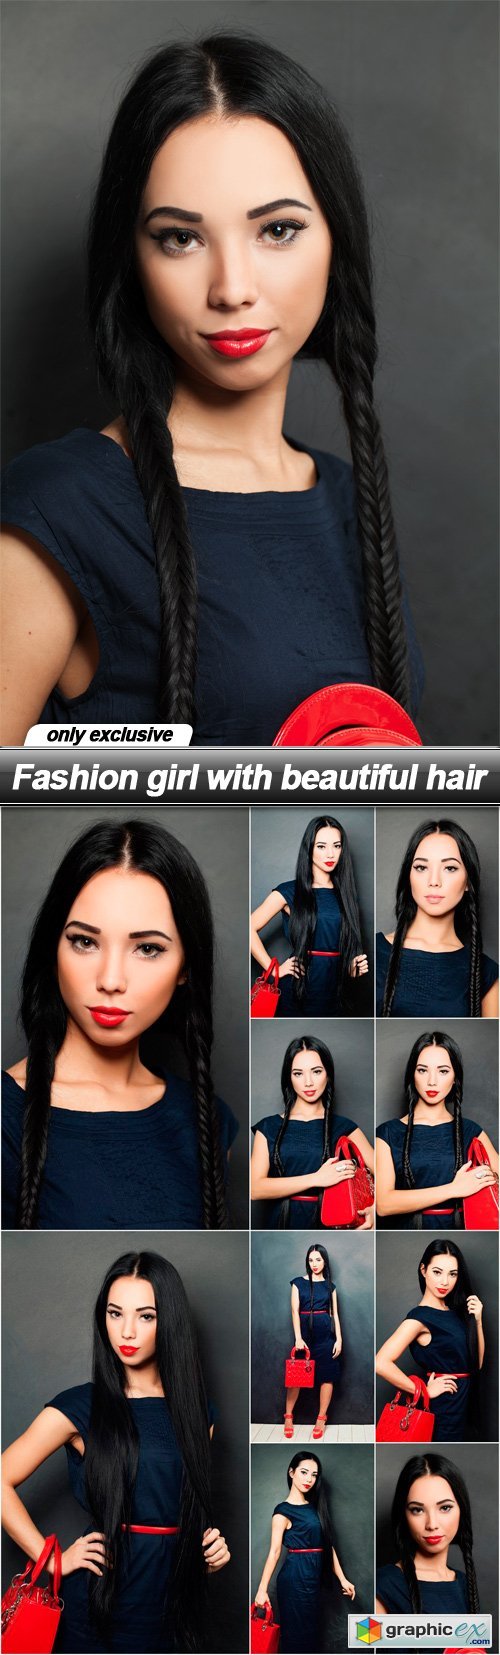 Fashion girl with beautiful hair - 10 UHQ JPEG